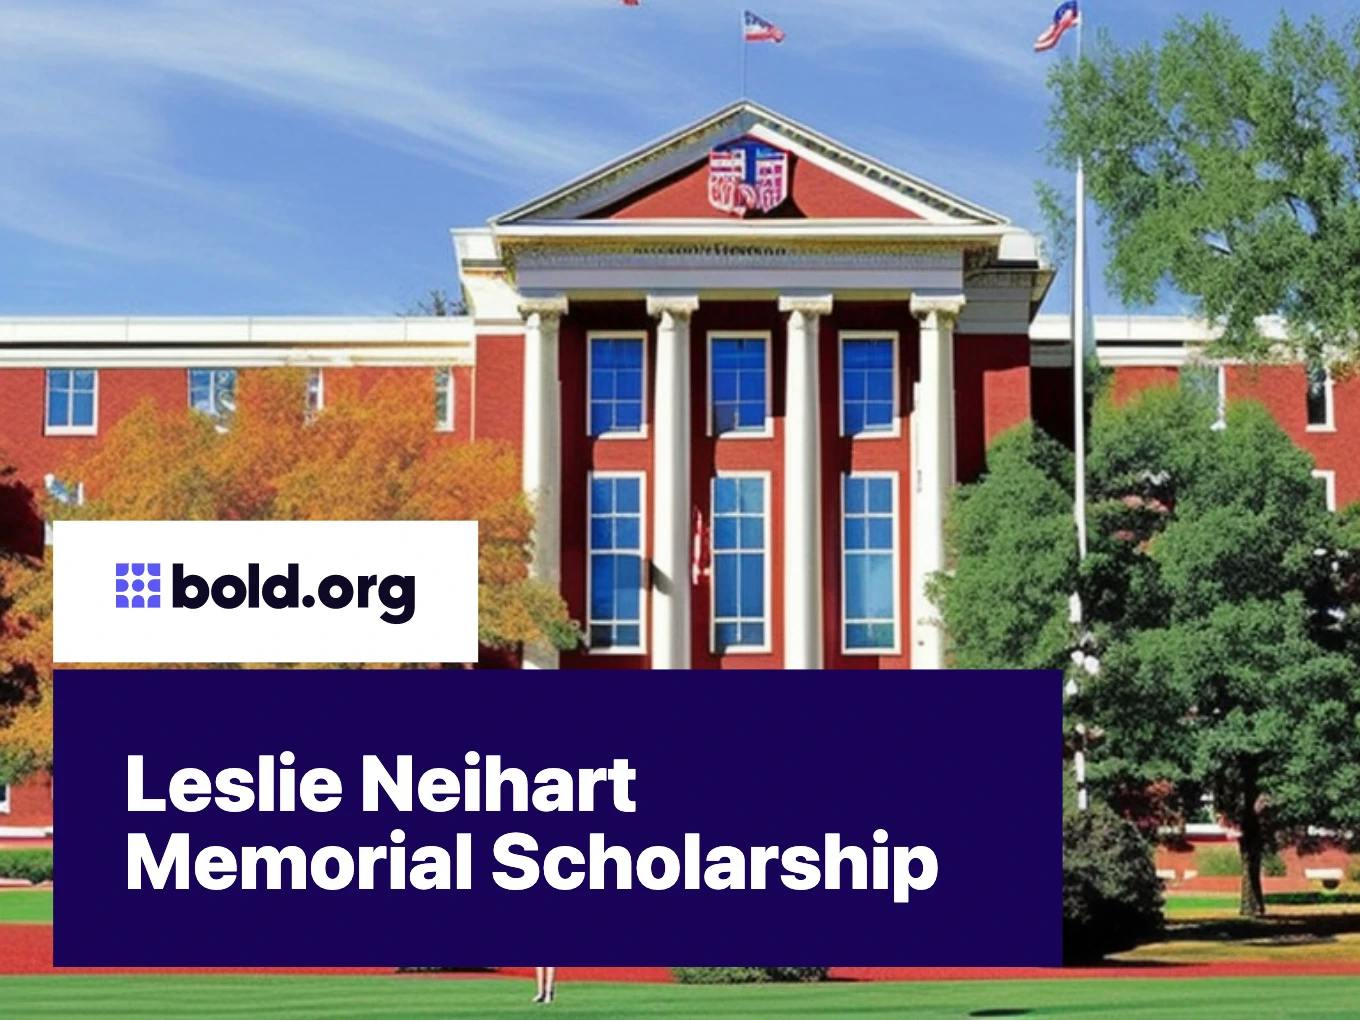 Leslie Neihart Memorial Scholarship